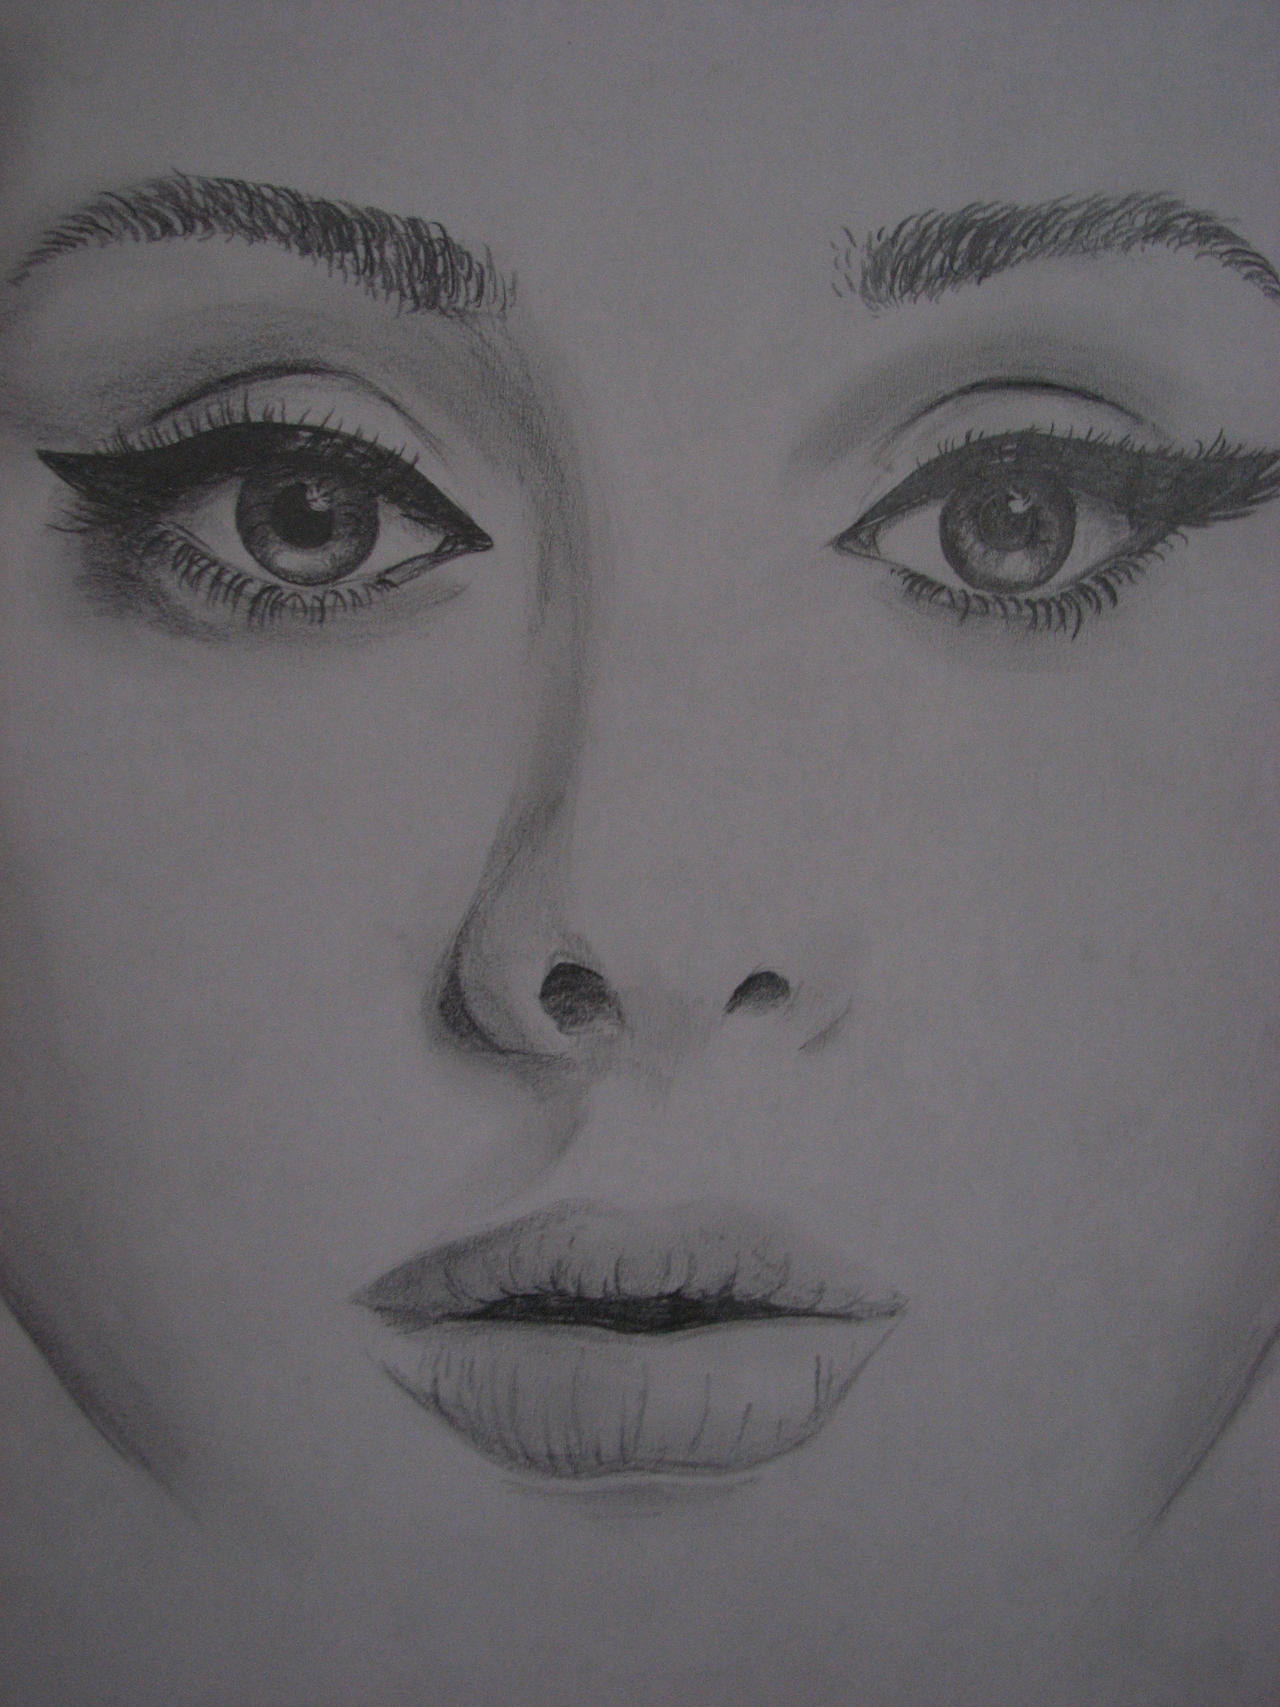 Adele drawing by ArtMartin on DeviantArt